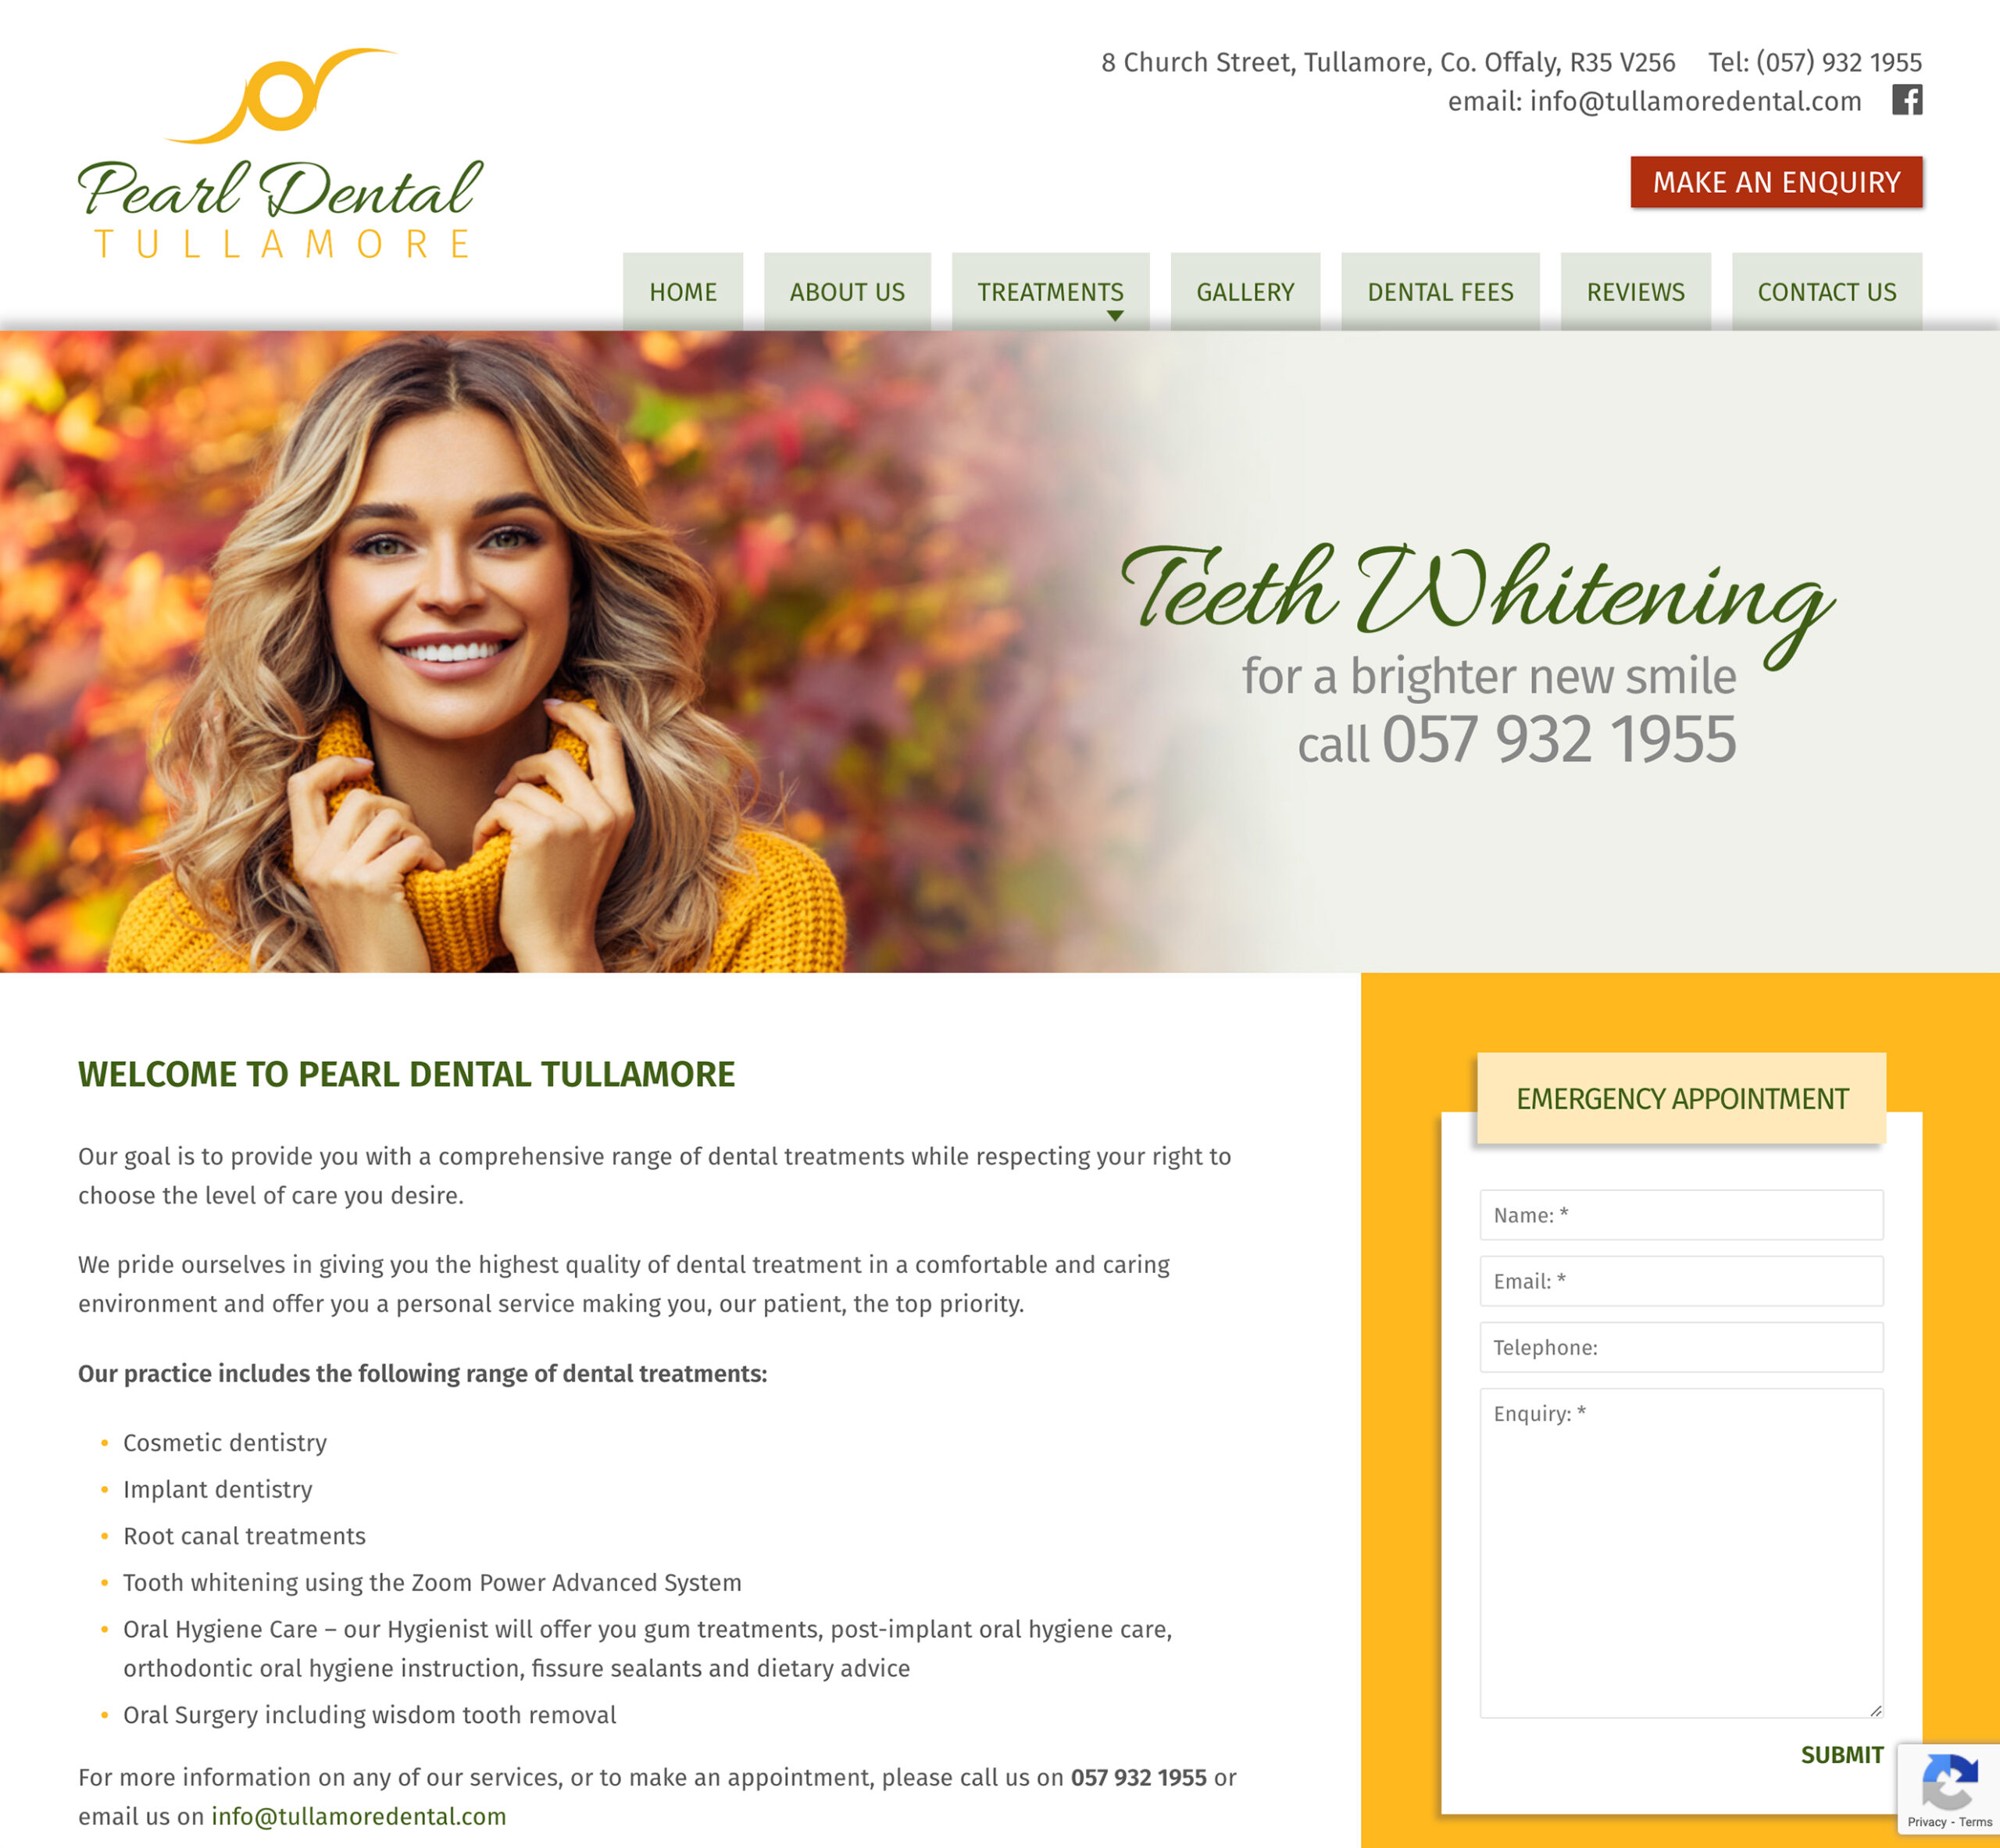 Pearl Dental Tullamore - Website